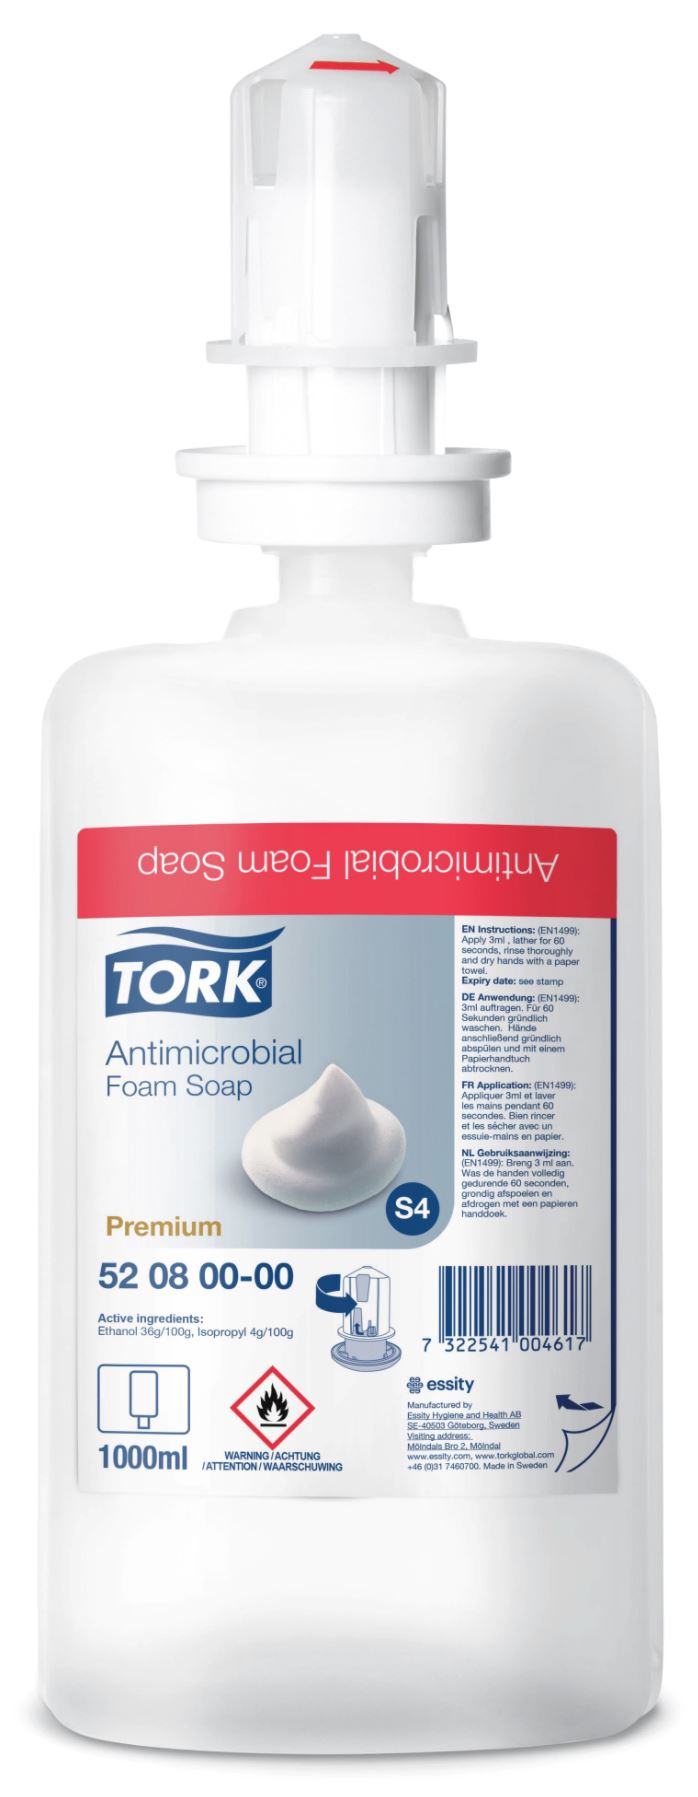 Tork S4 Premium Antimicrobial Foam Soap - Voussert